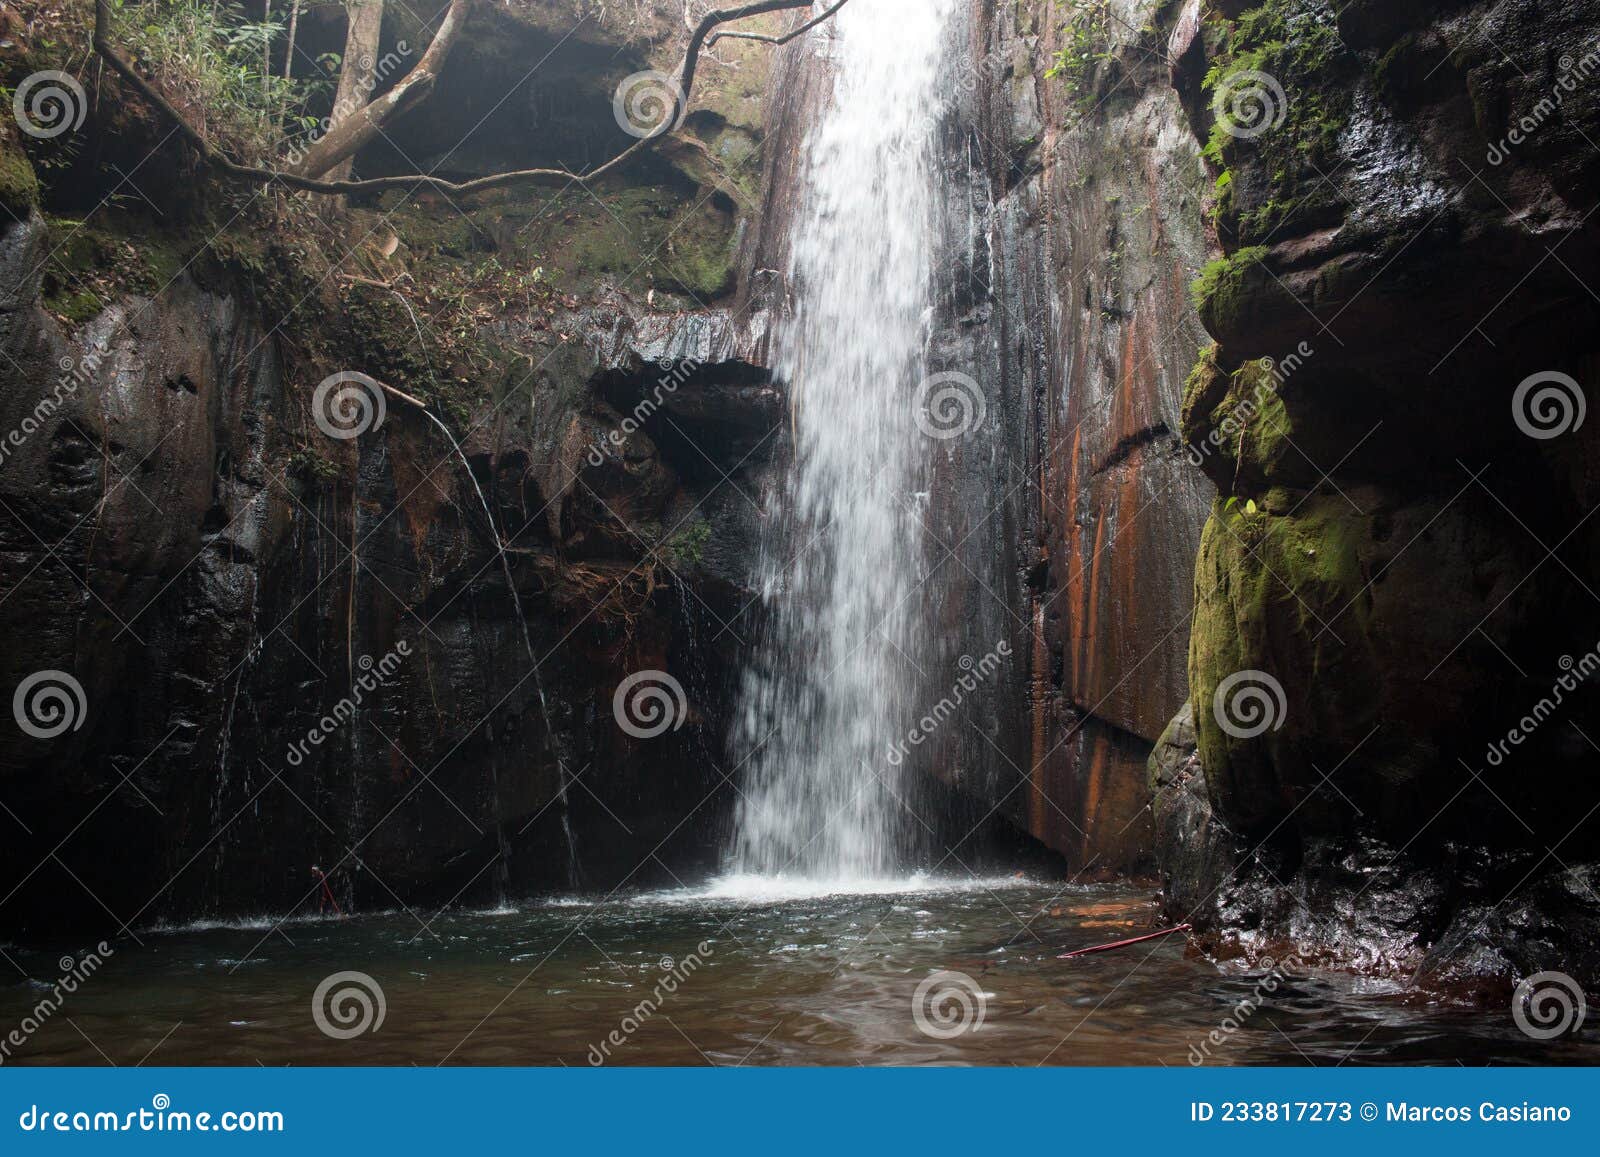 the waterfall cachoeira caverna in brazil